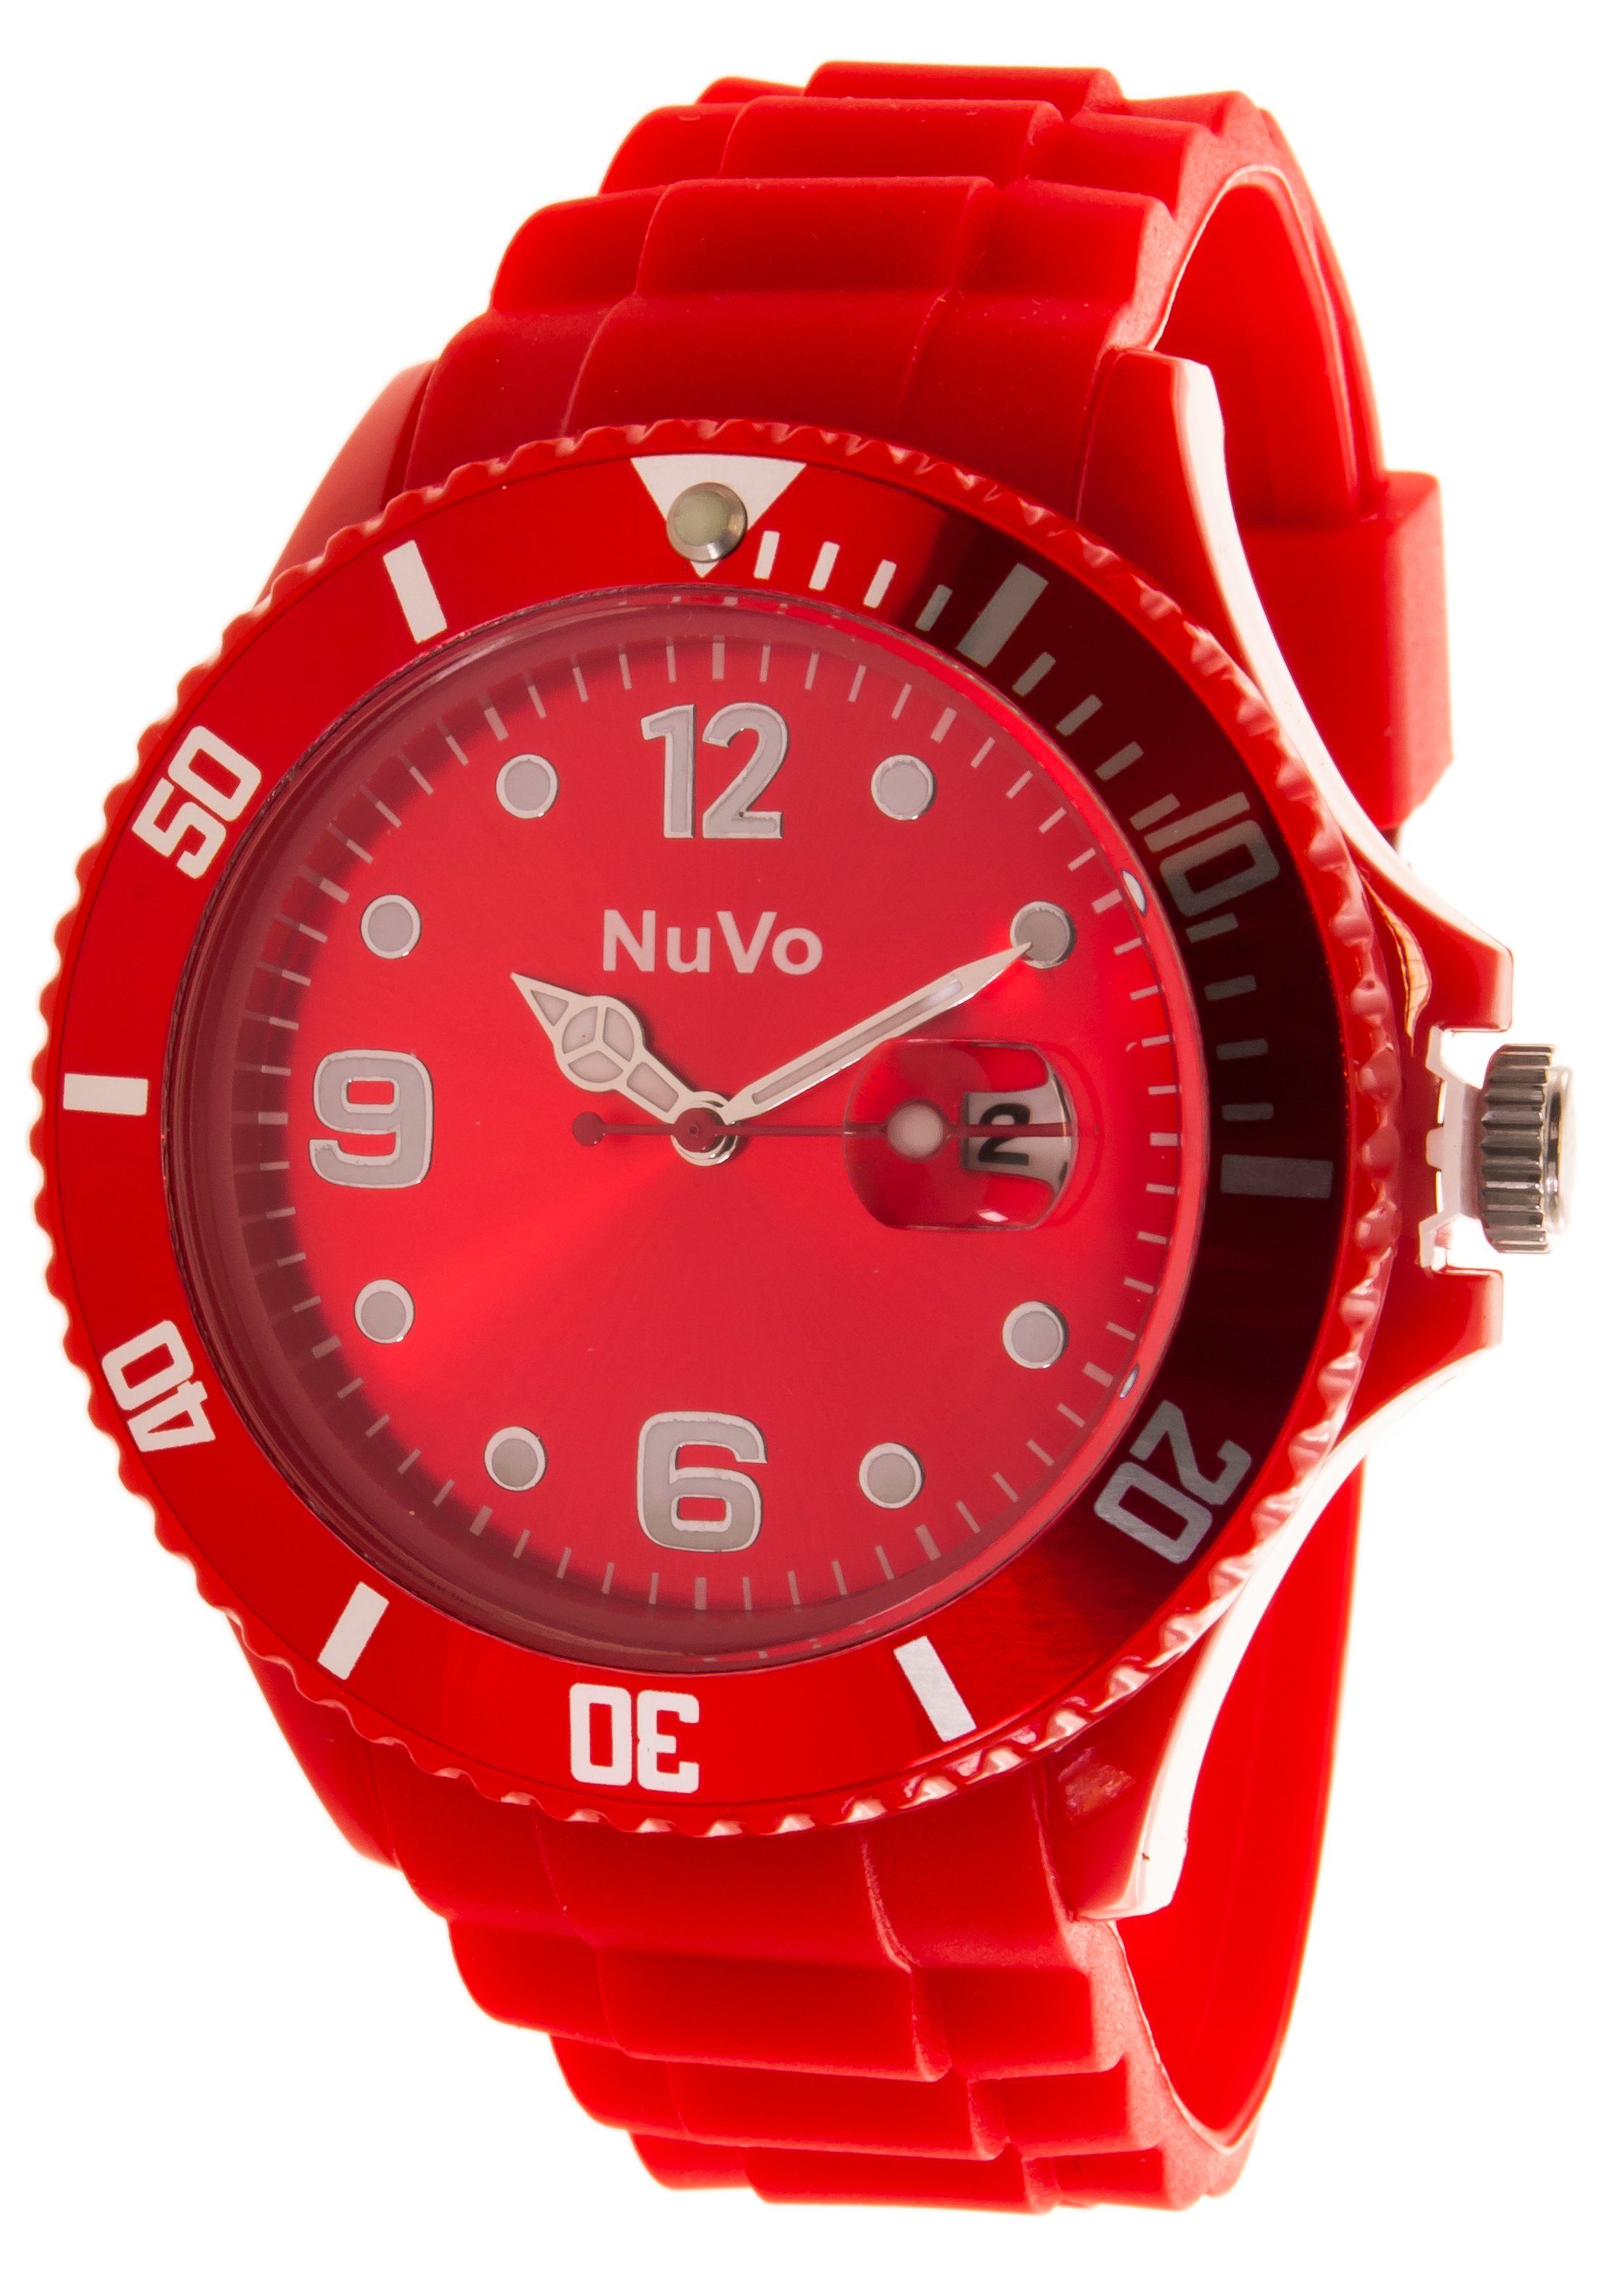 Nuvo Quarzuhr Design mit sportlichem Armbanduhr Unisex